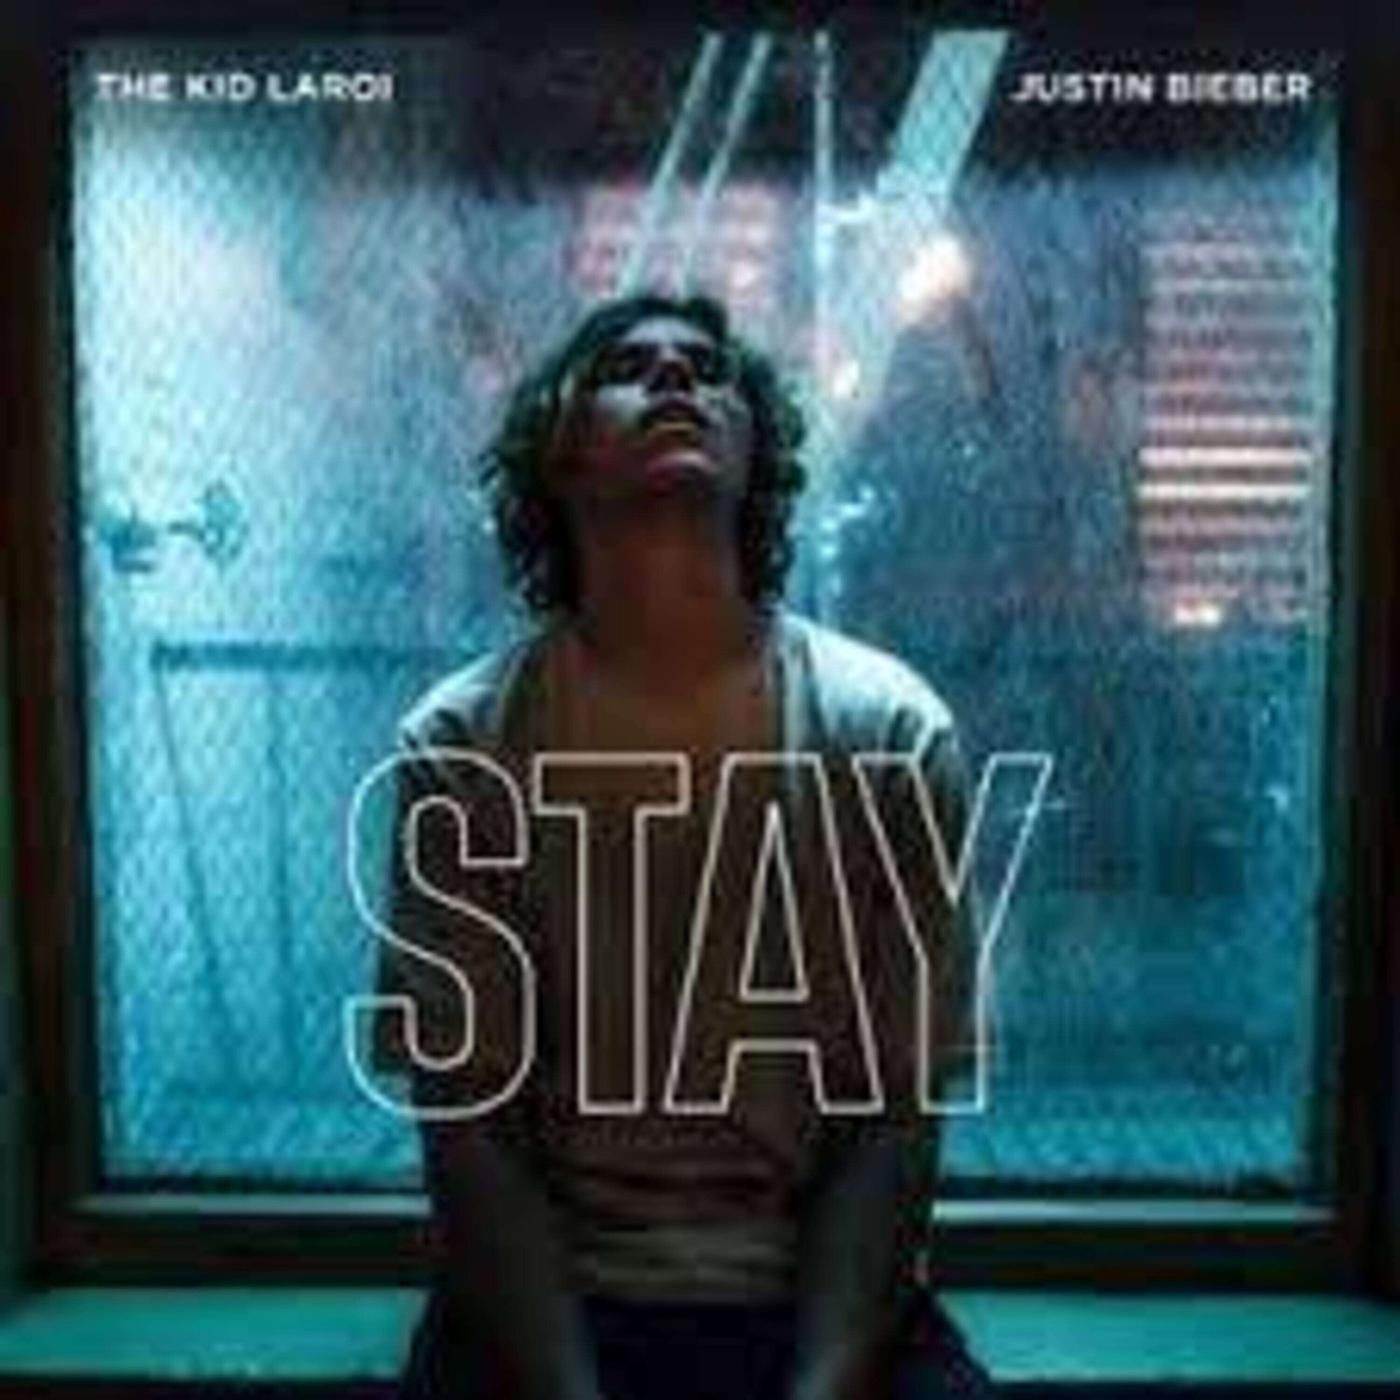 Kid LAROI ft Justin Bieber, Stay - Cover Album 